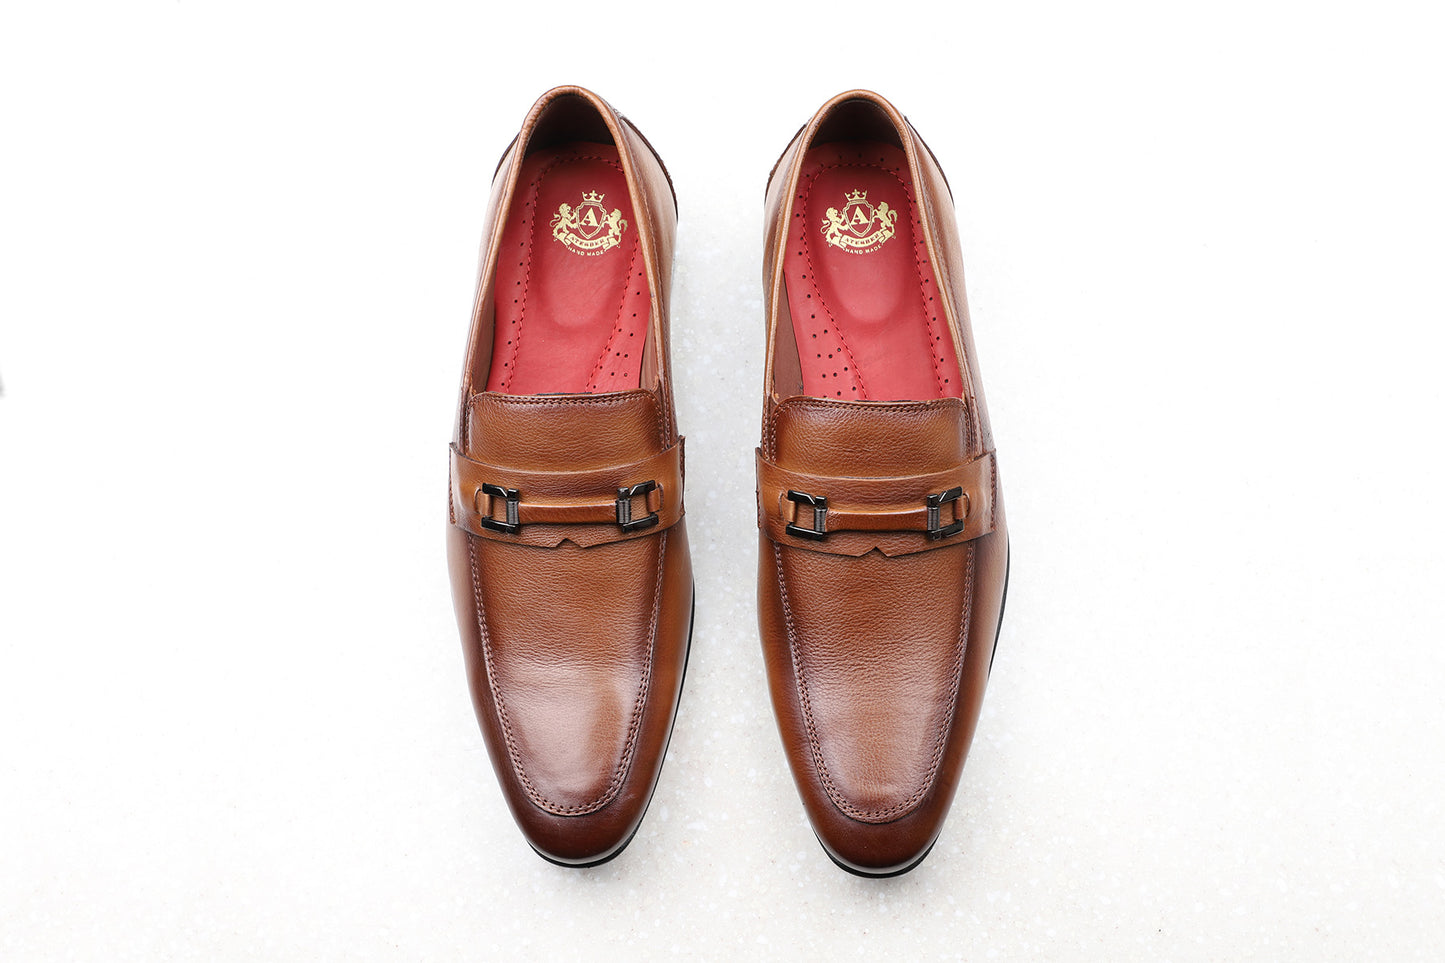 Atesber Brooch Casual Shoes-Tan For Men